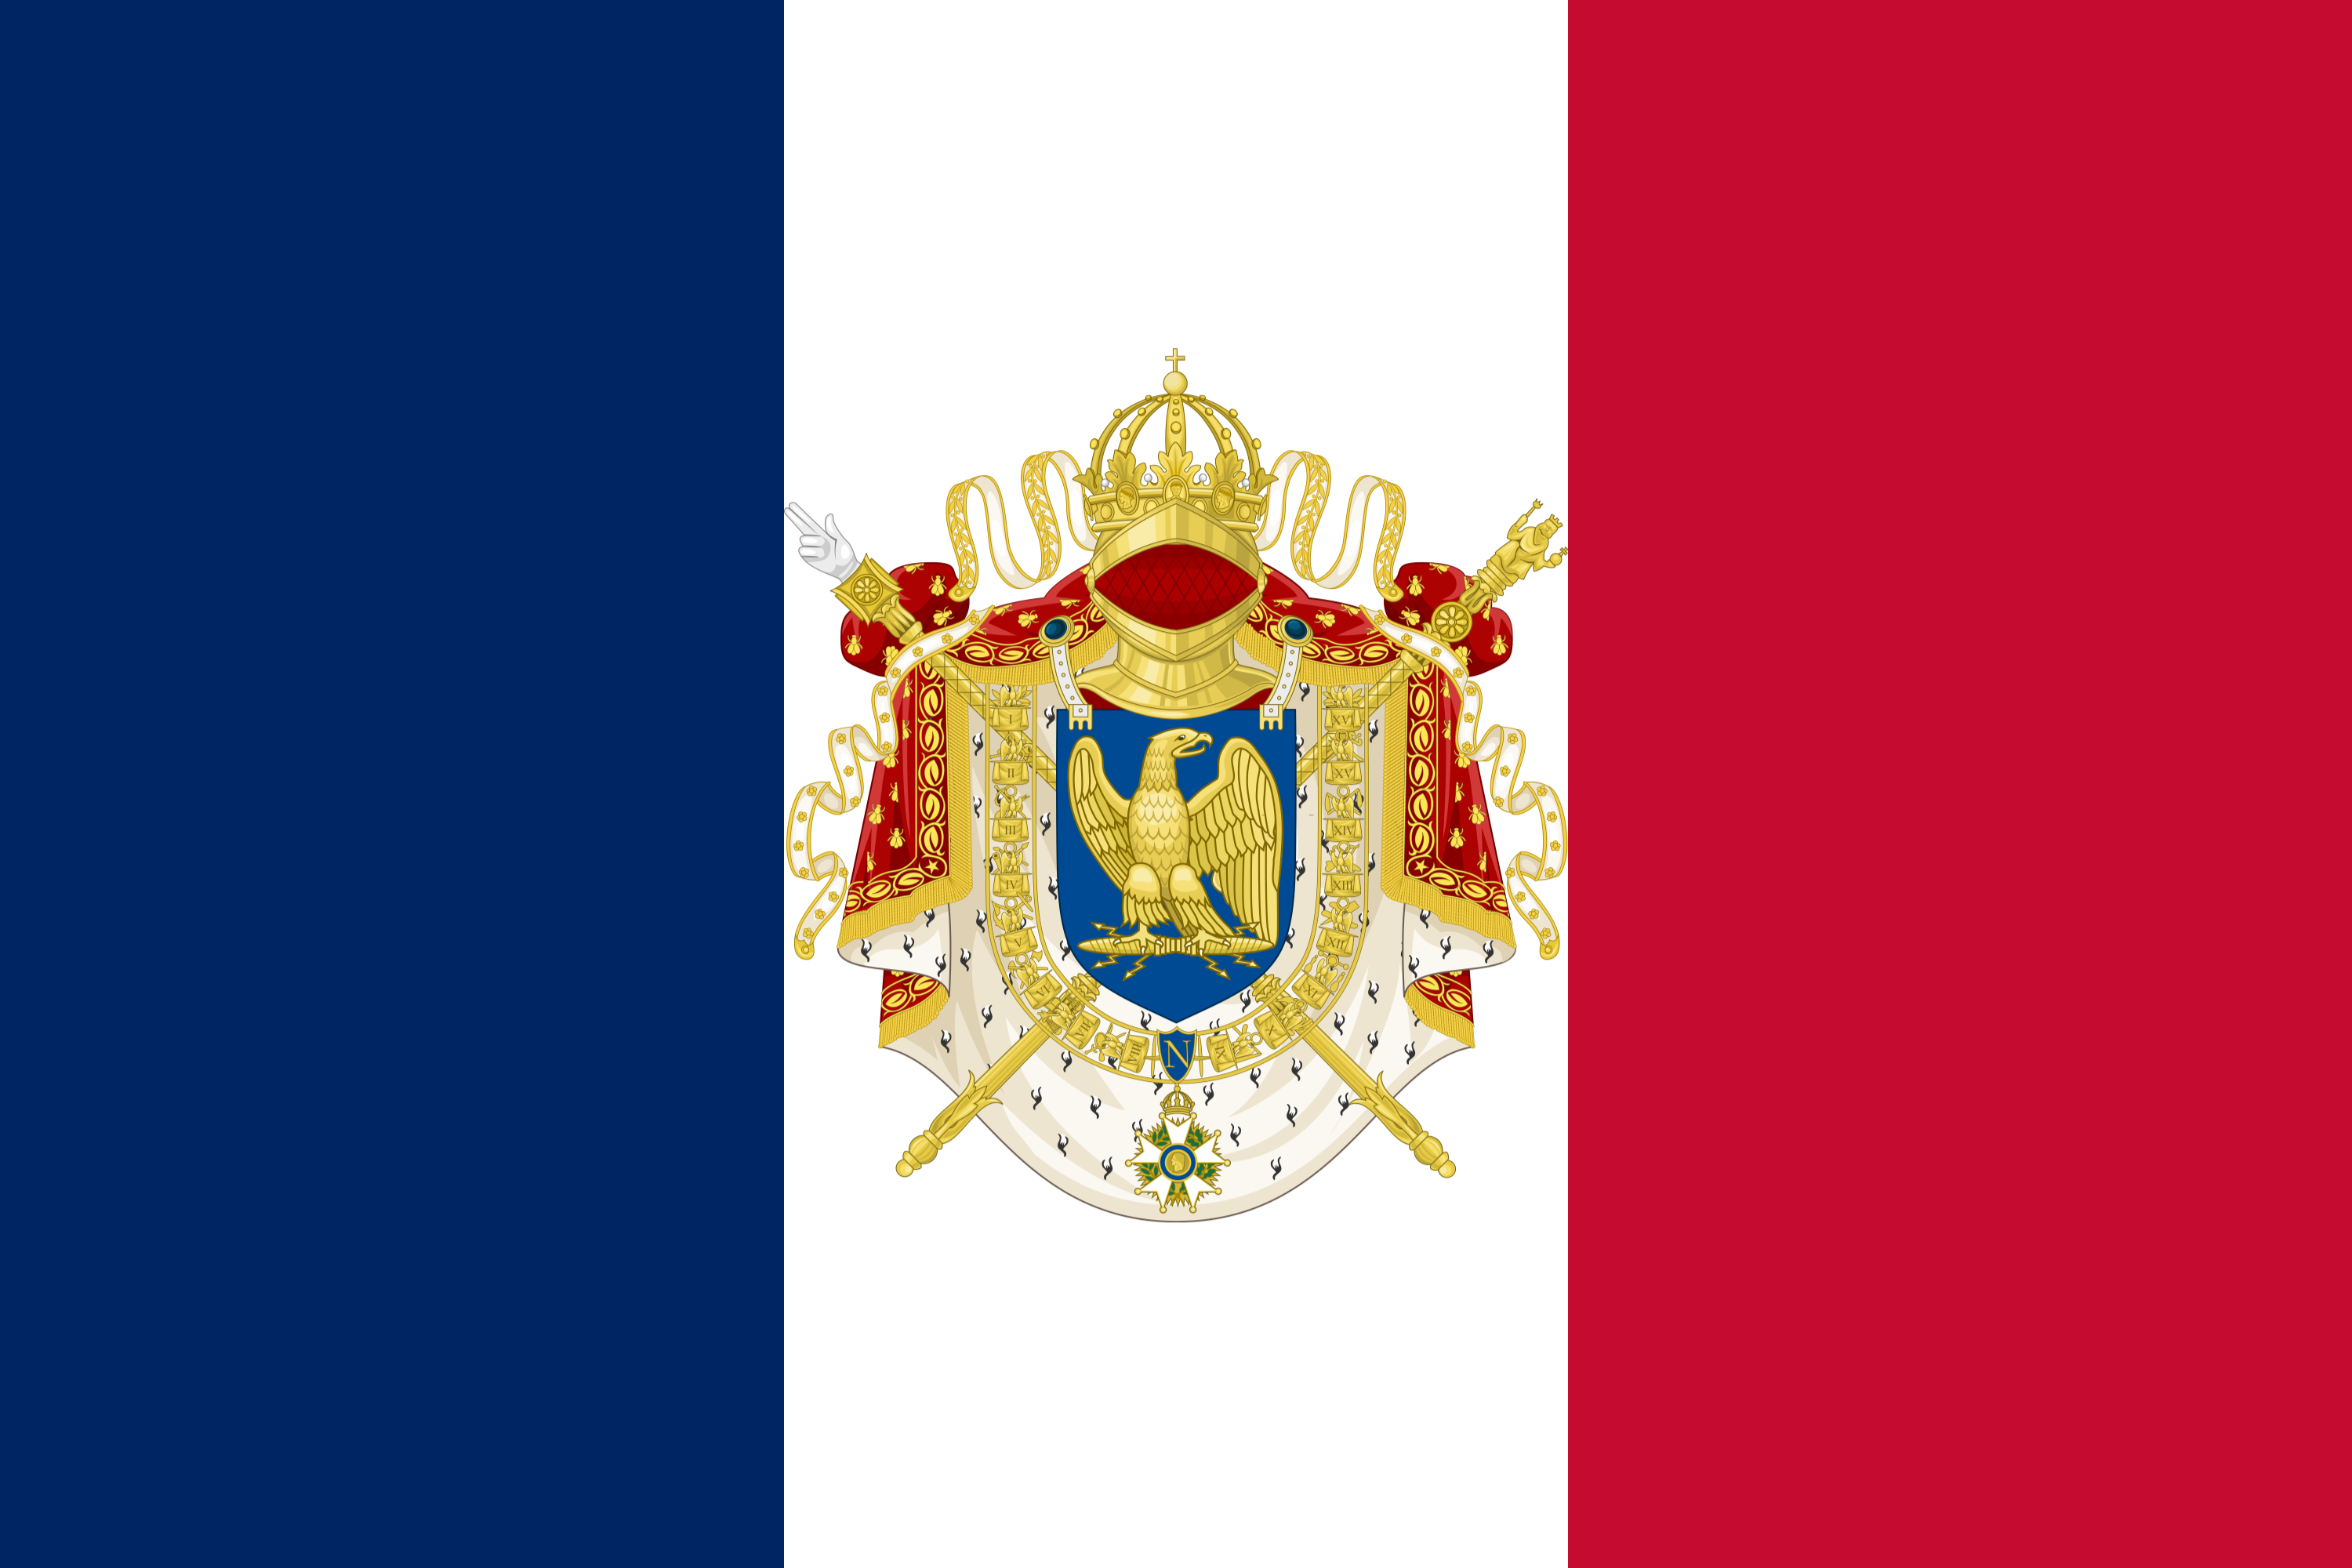 Флаг Франции Наполеона 1. Флаг французской империи 1812. Флаг наполеоновской Франции 1812. Флаг Франции 19 века при Наполеоне.